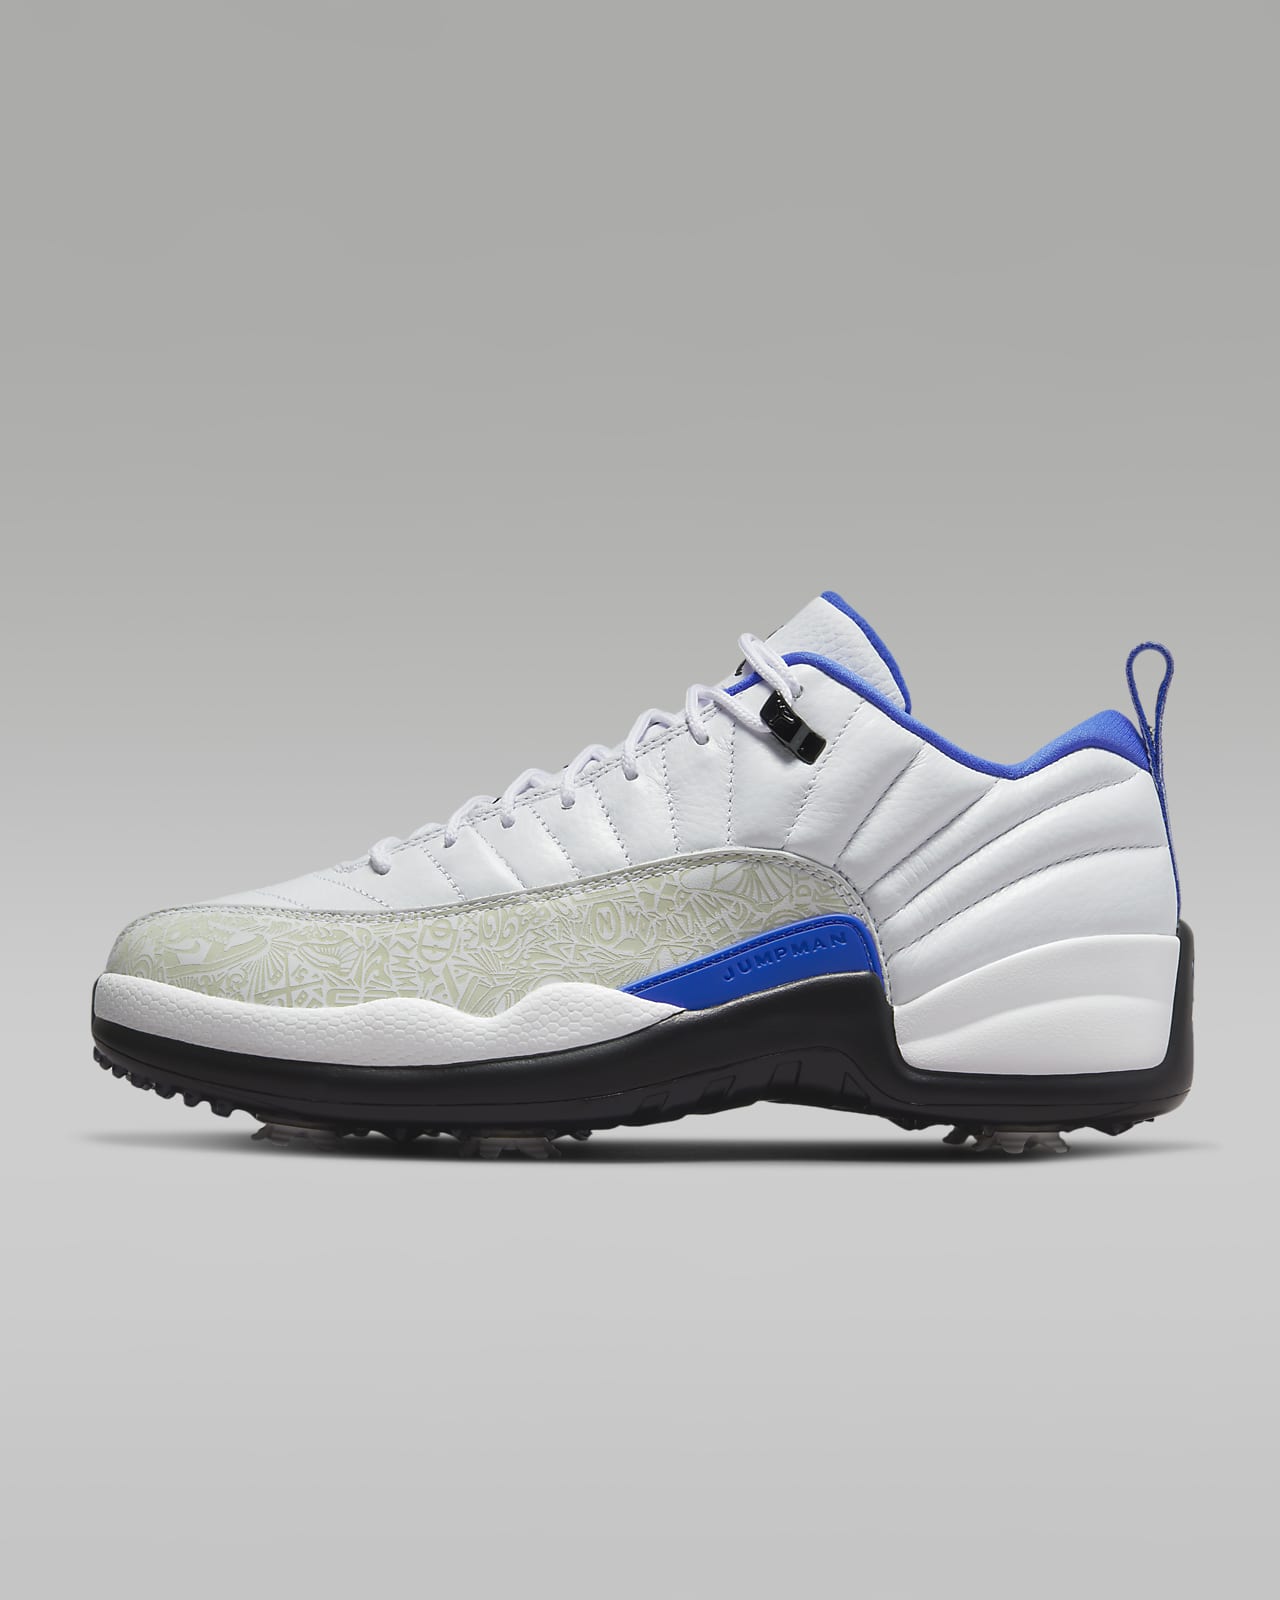 Jordan XII G Golf Shoes Review